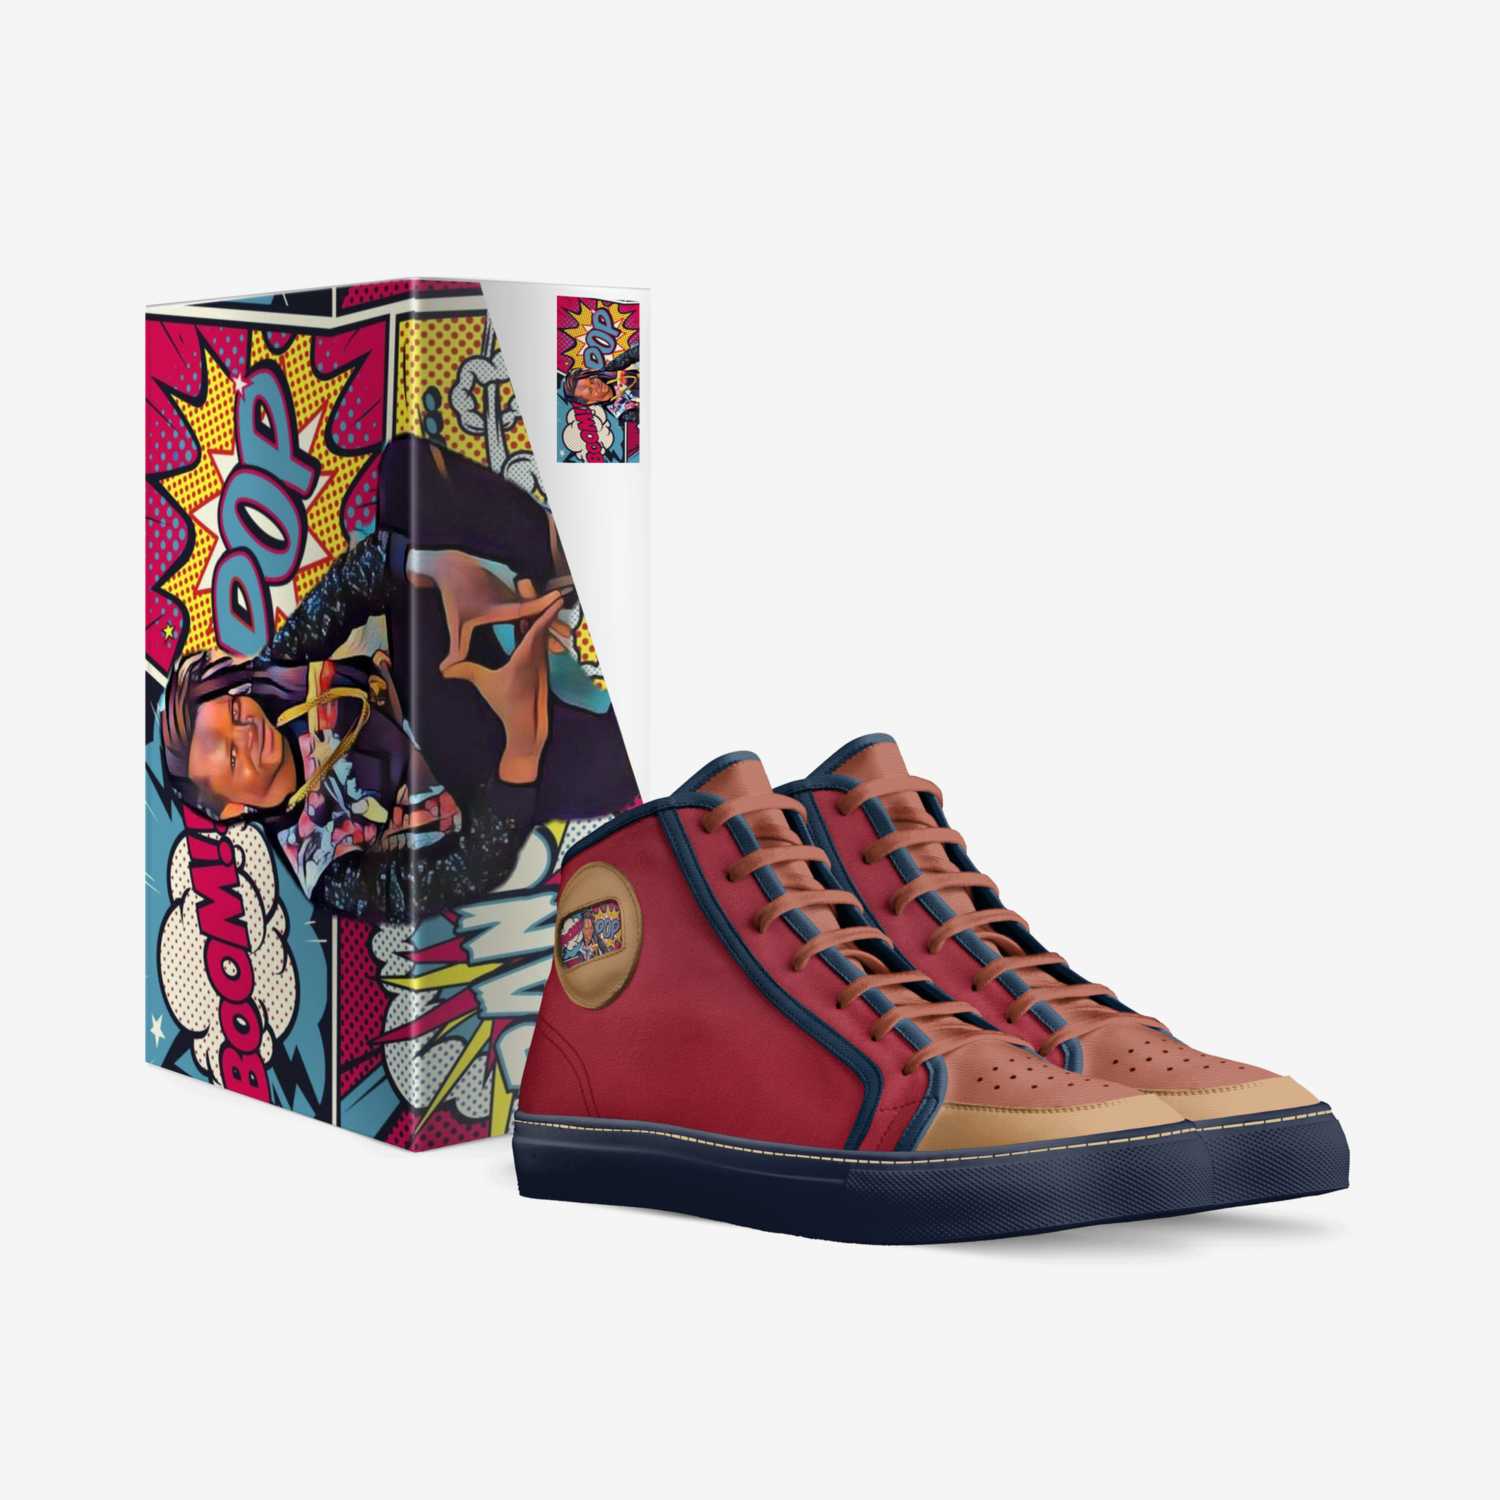 Lofa Vibes custom made in Italy shoes by The Bundoo'S | Box view